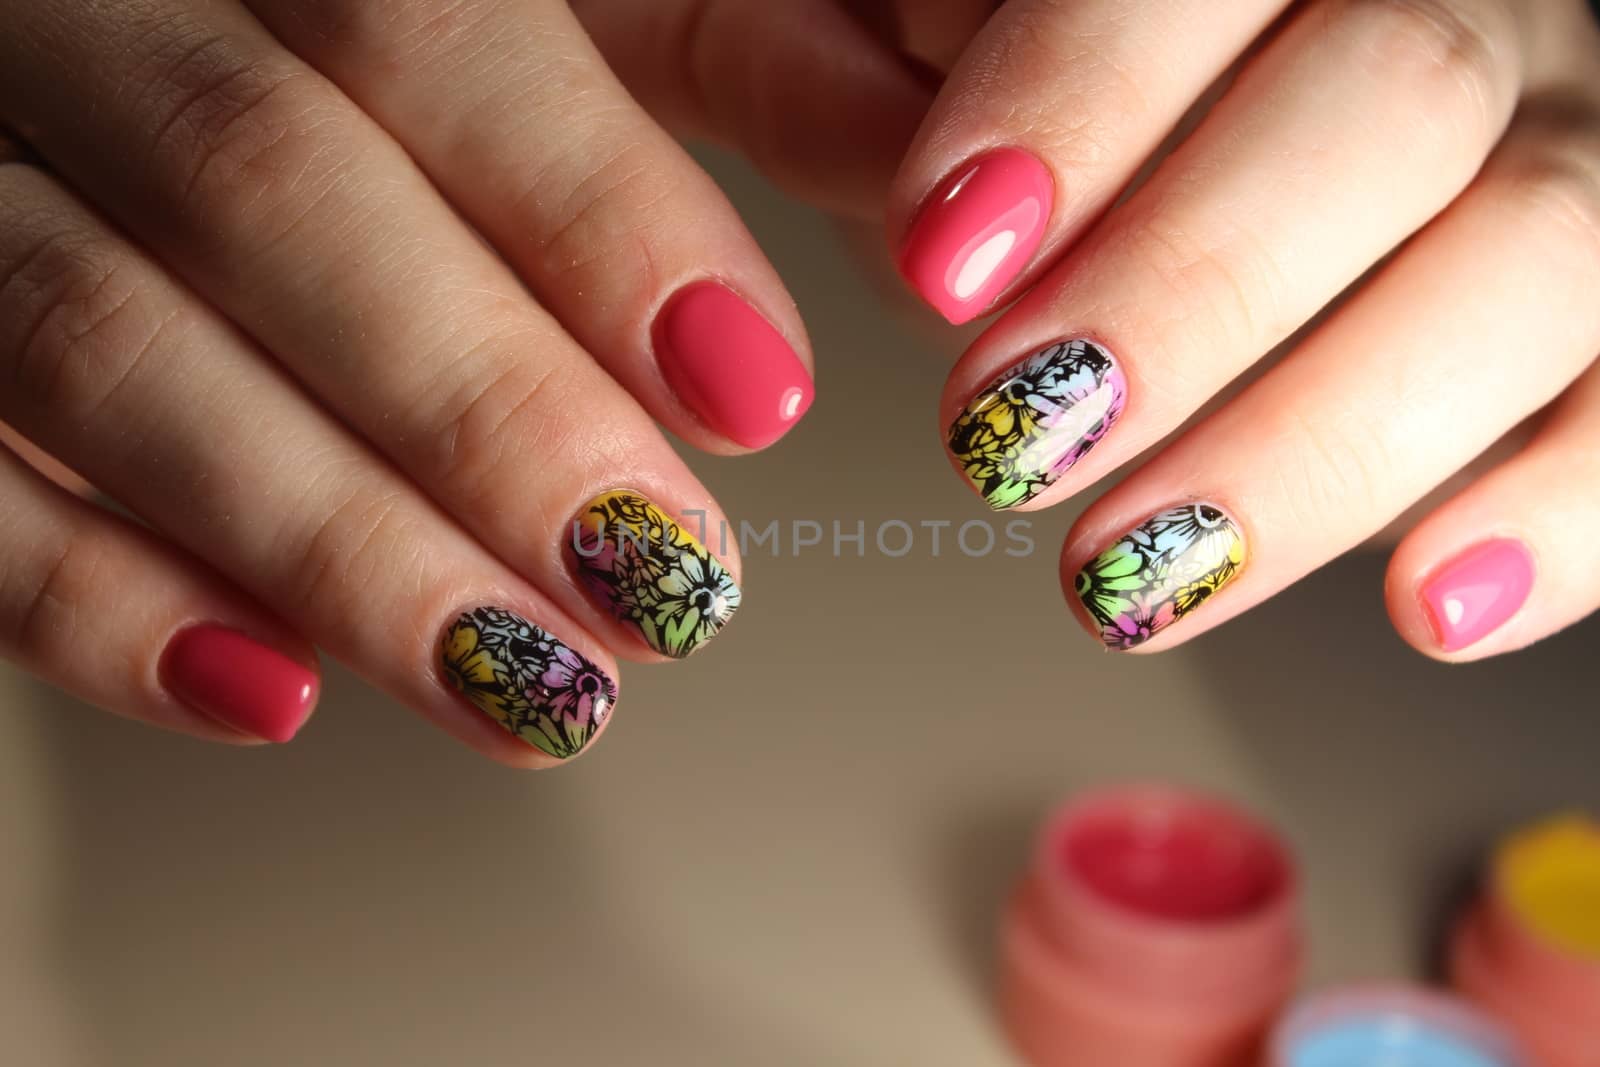 Bright, colorful design of manicure by SmirMaxStock